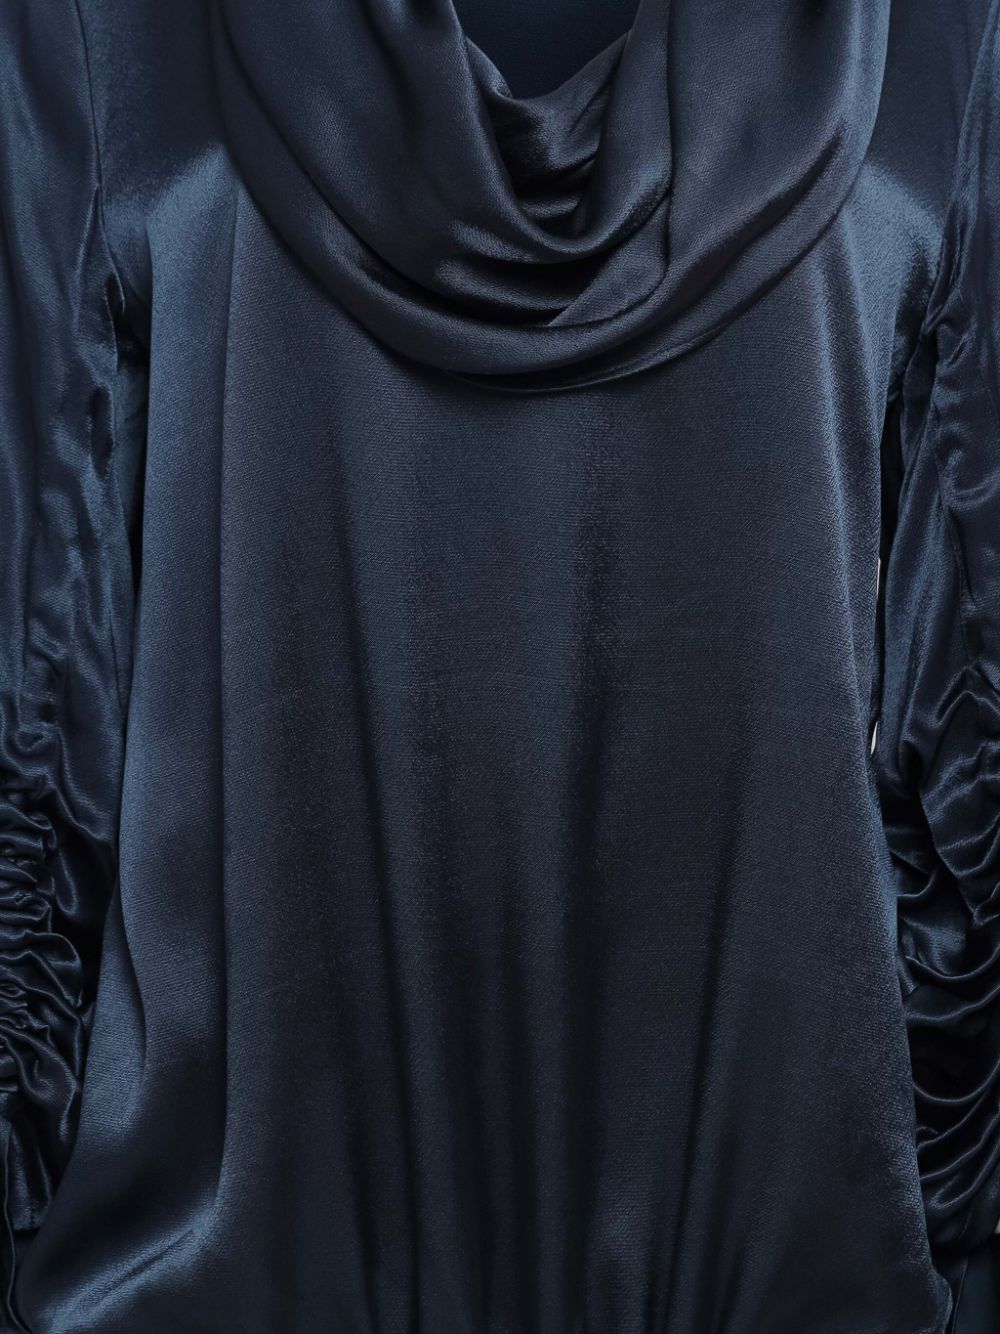 Uma | Raquel Davidowicz Satijnen blouse - Blauw